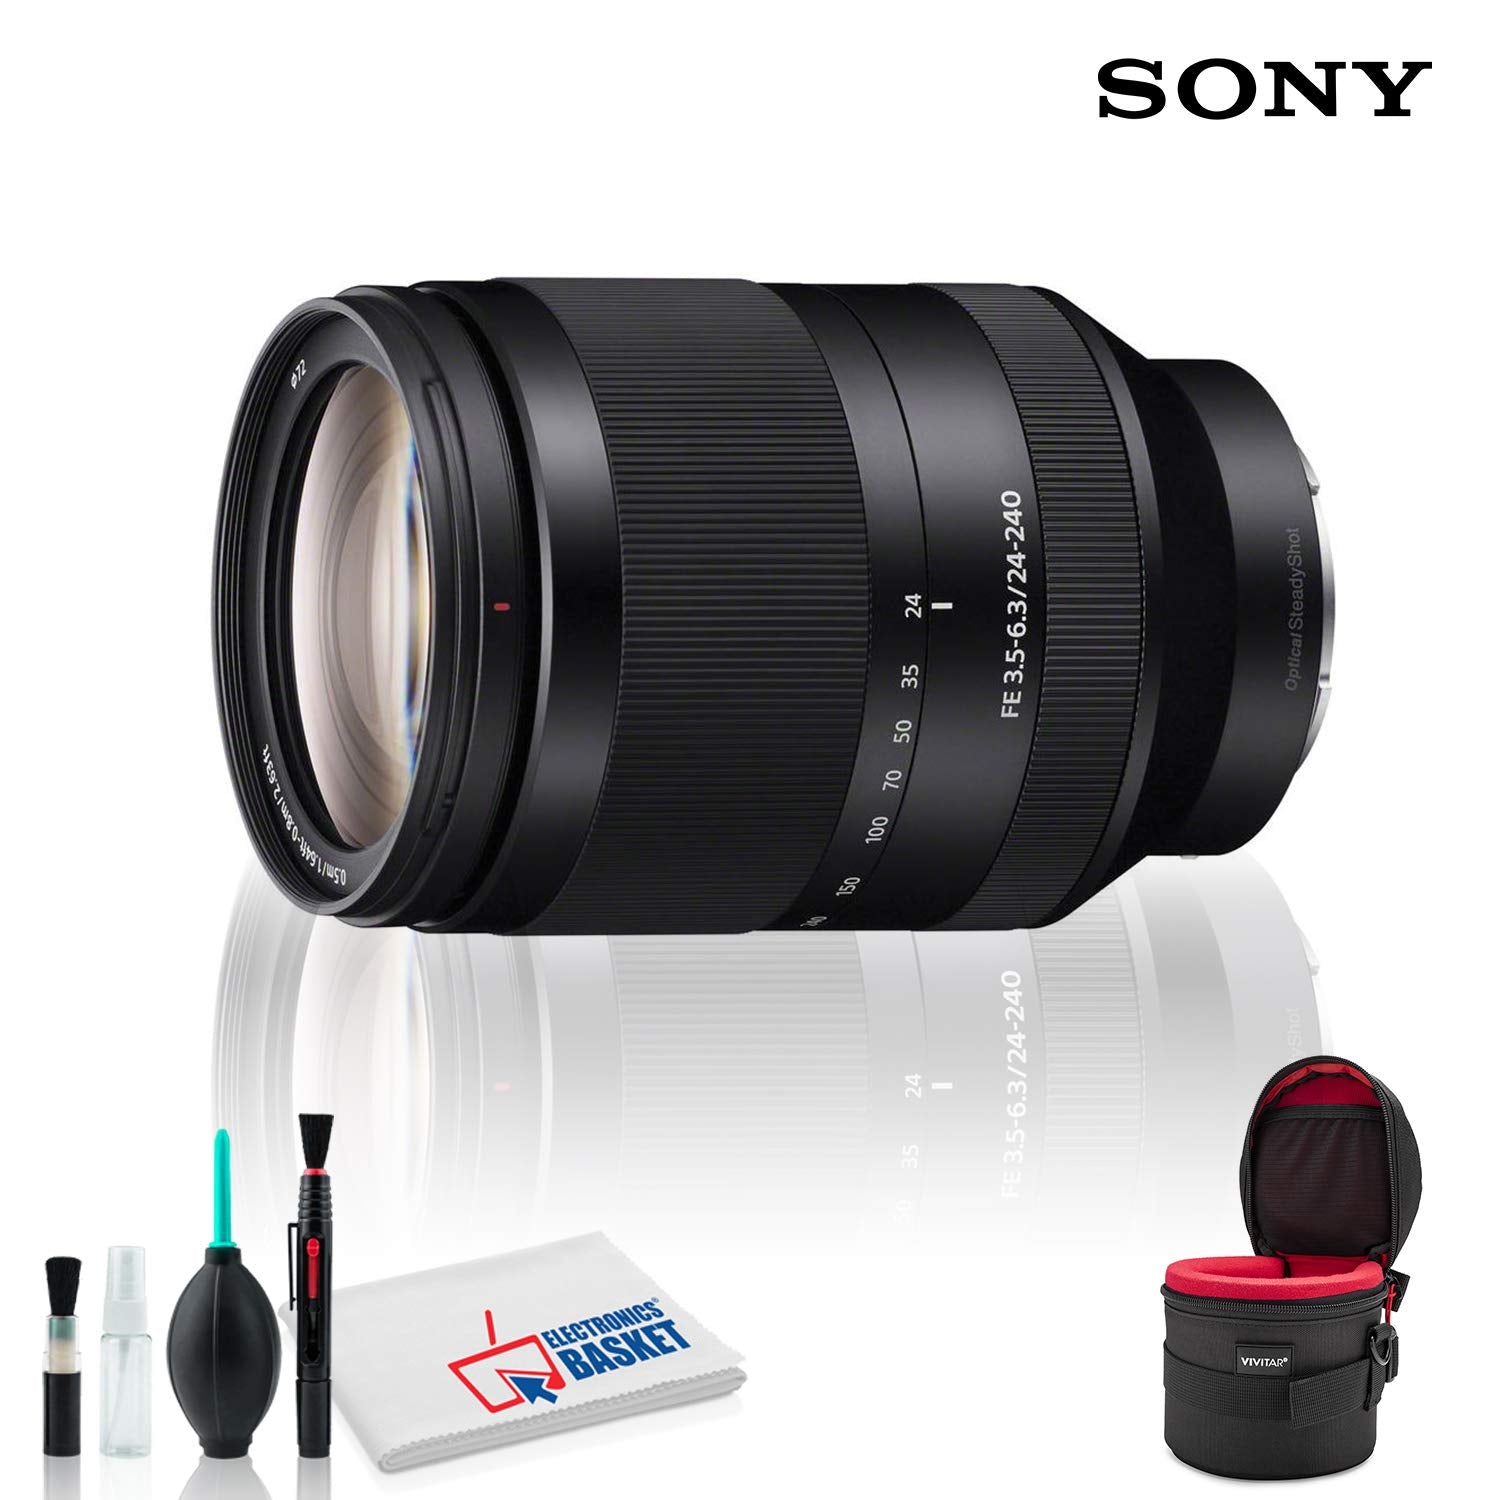 SONY SEL FE 24-240 f/3.5-6.3 OSS Lens (Intl Model) with Cleaning Kit and Padded Lens Case